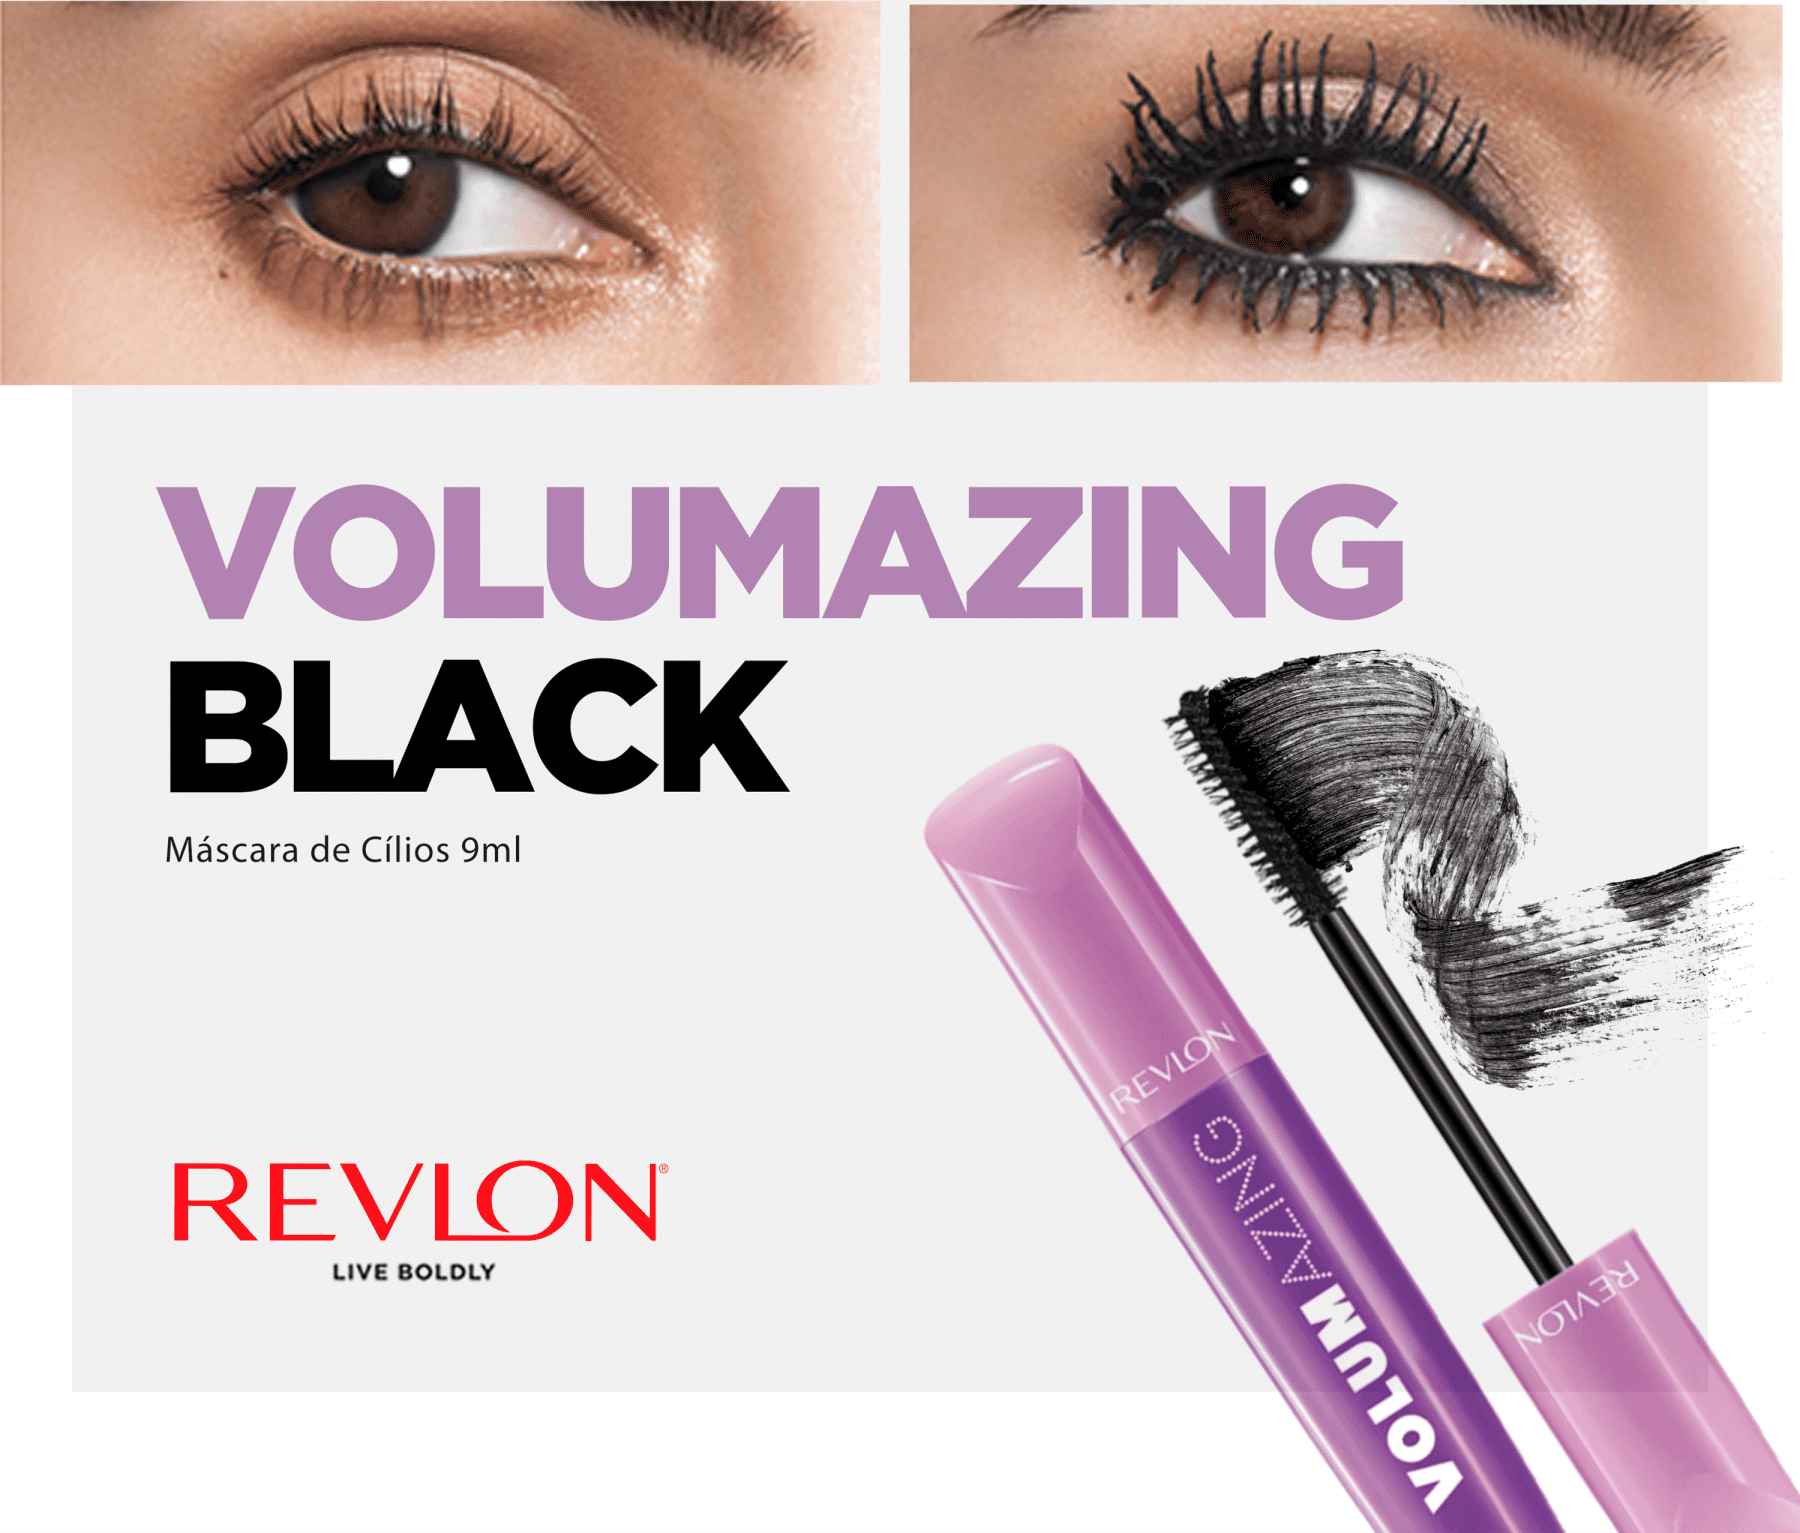 Volumazing™ Mascara, Eye Makeup for Volume - Revlon